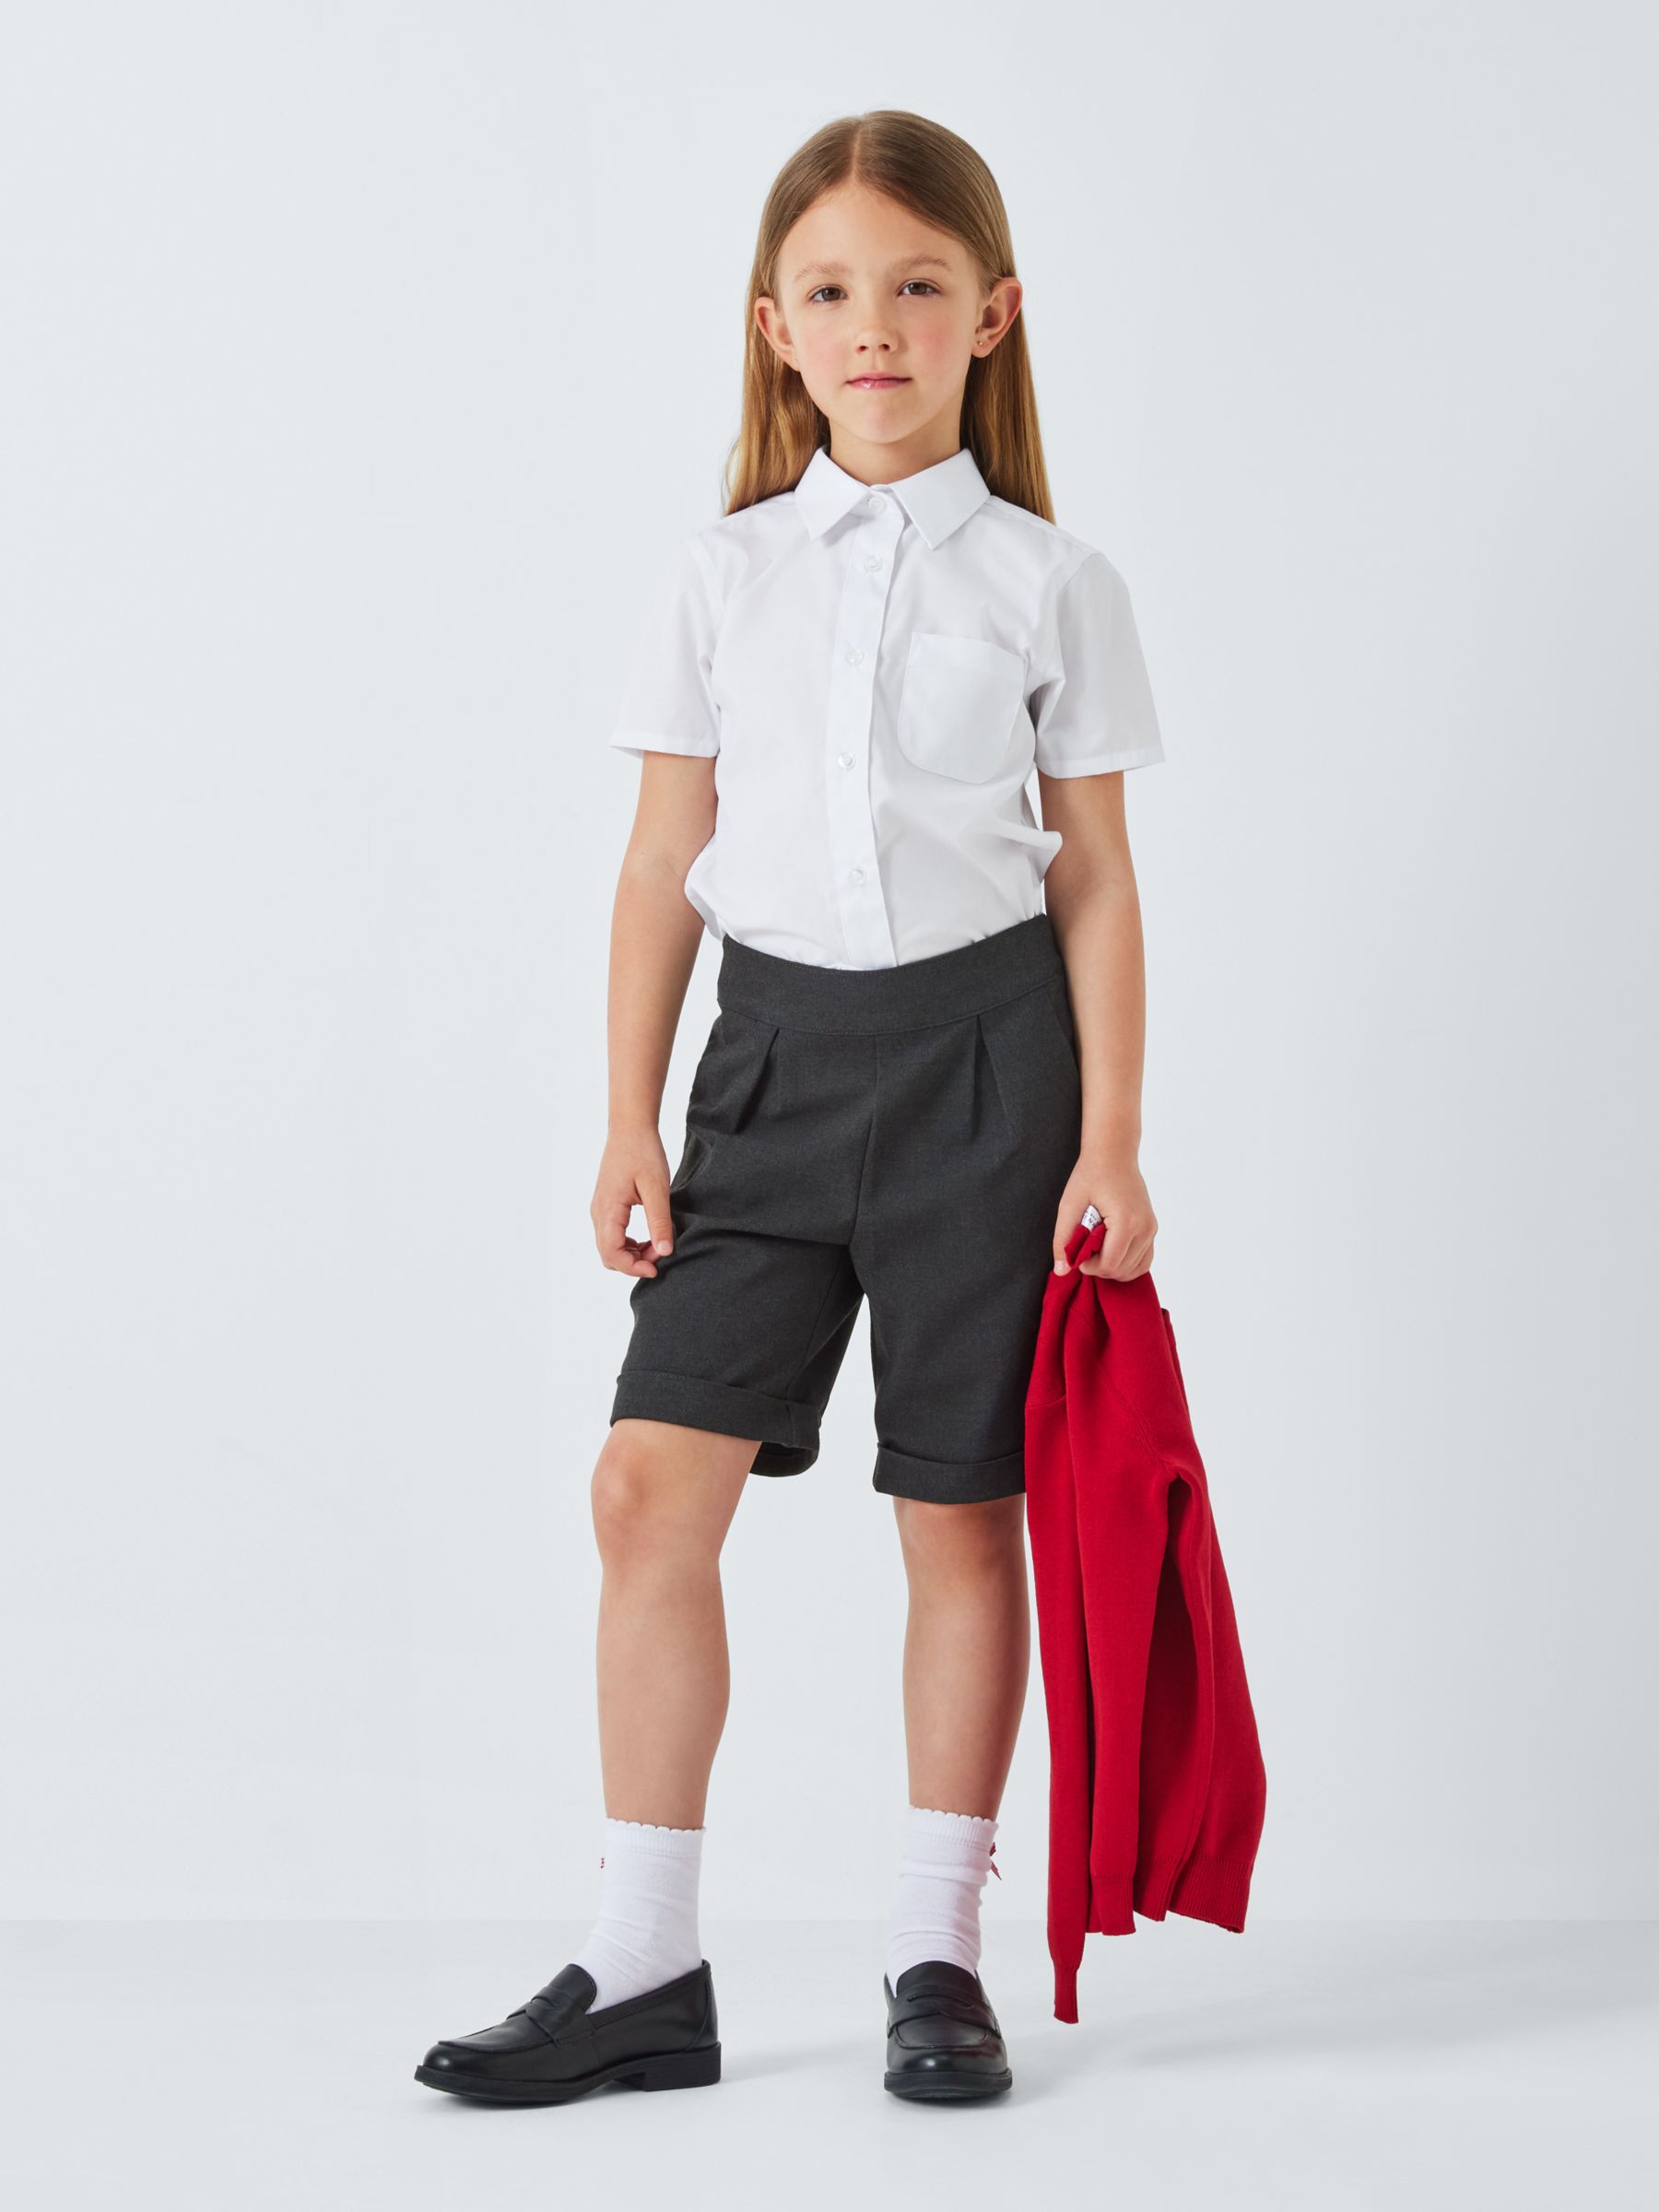 John Lewis Short Sleeve School Blouse, Pack of 2 at John Lewis & Partners